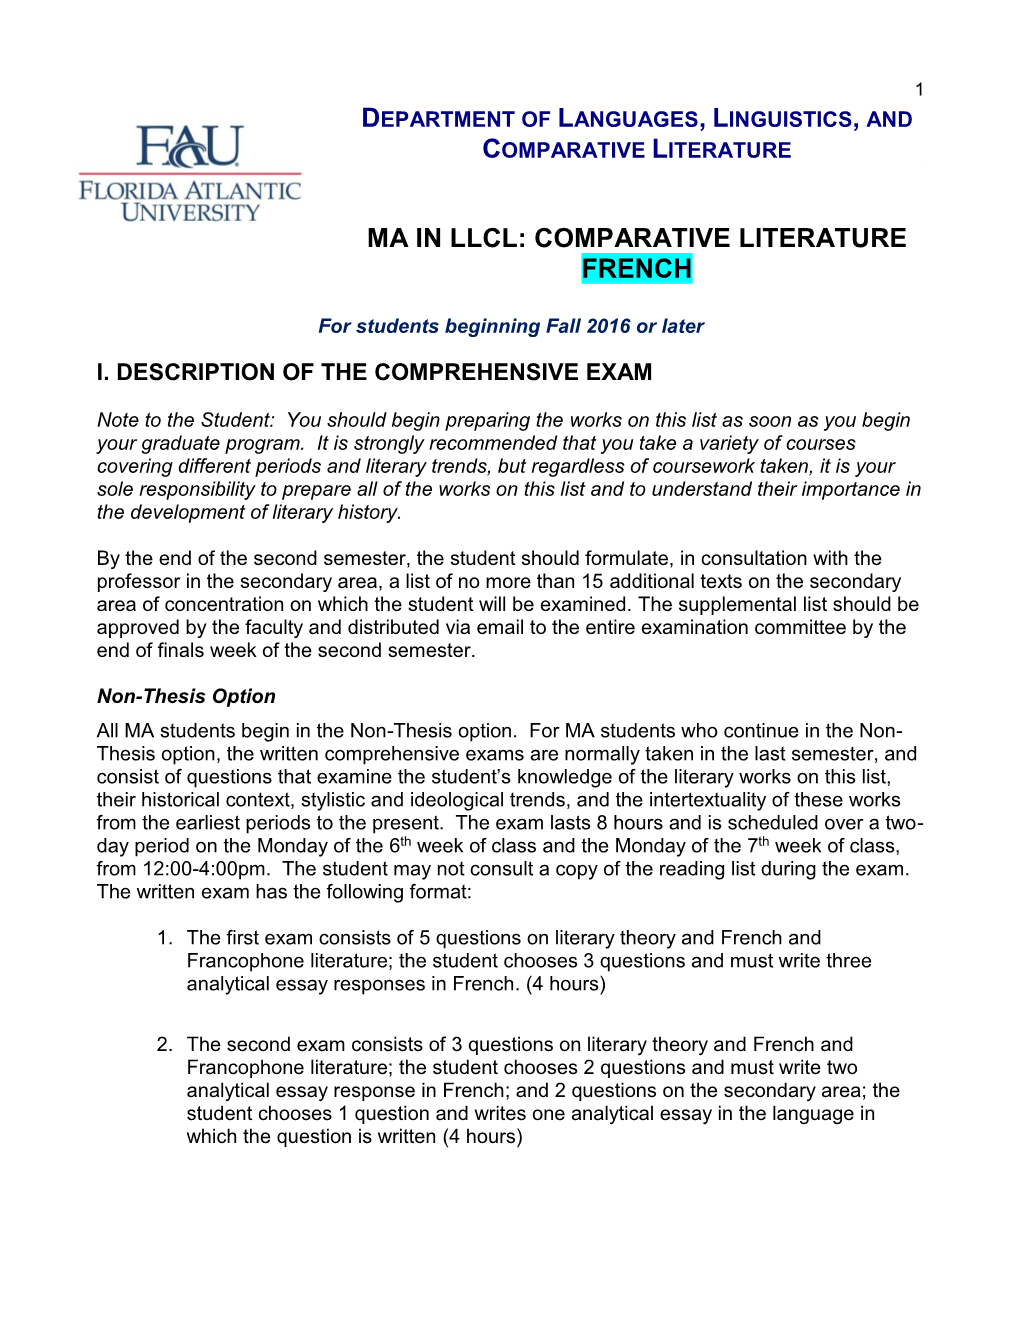 Ma in Llcl: Comparative Literature French